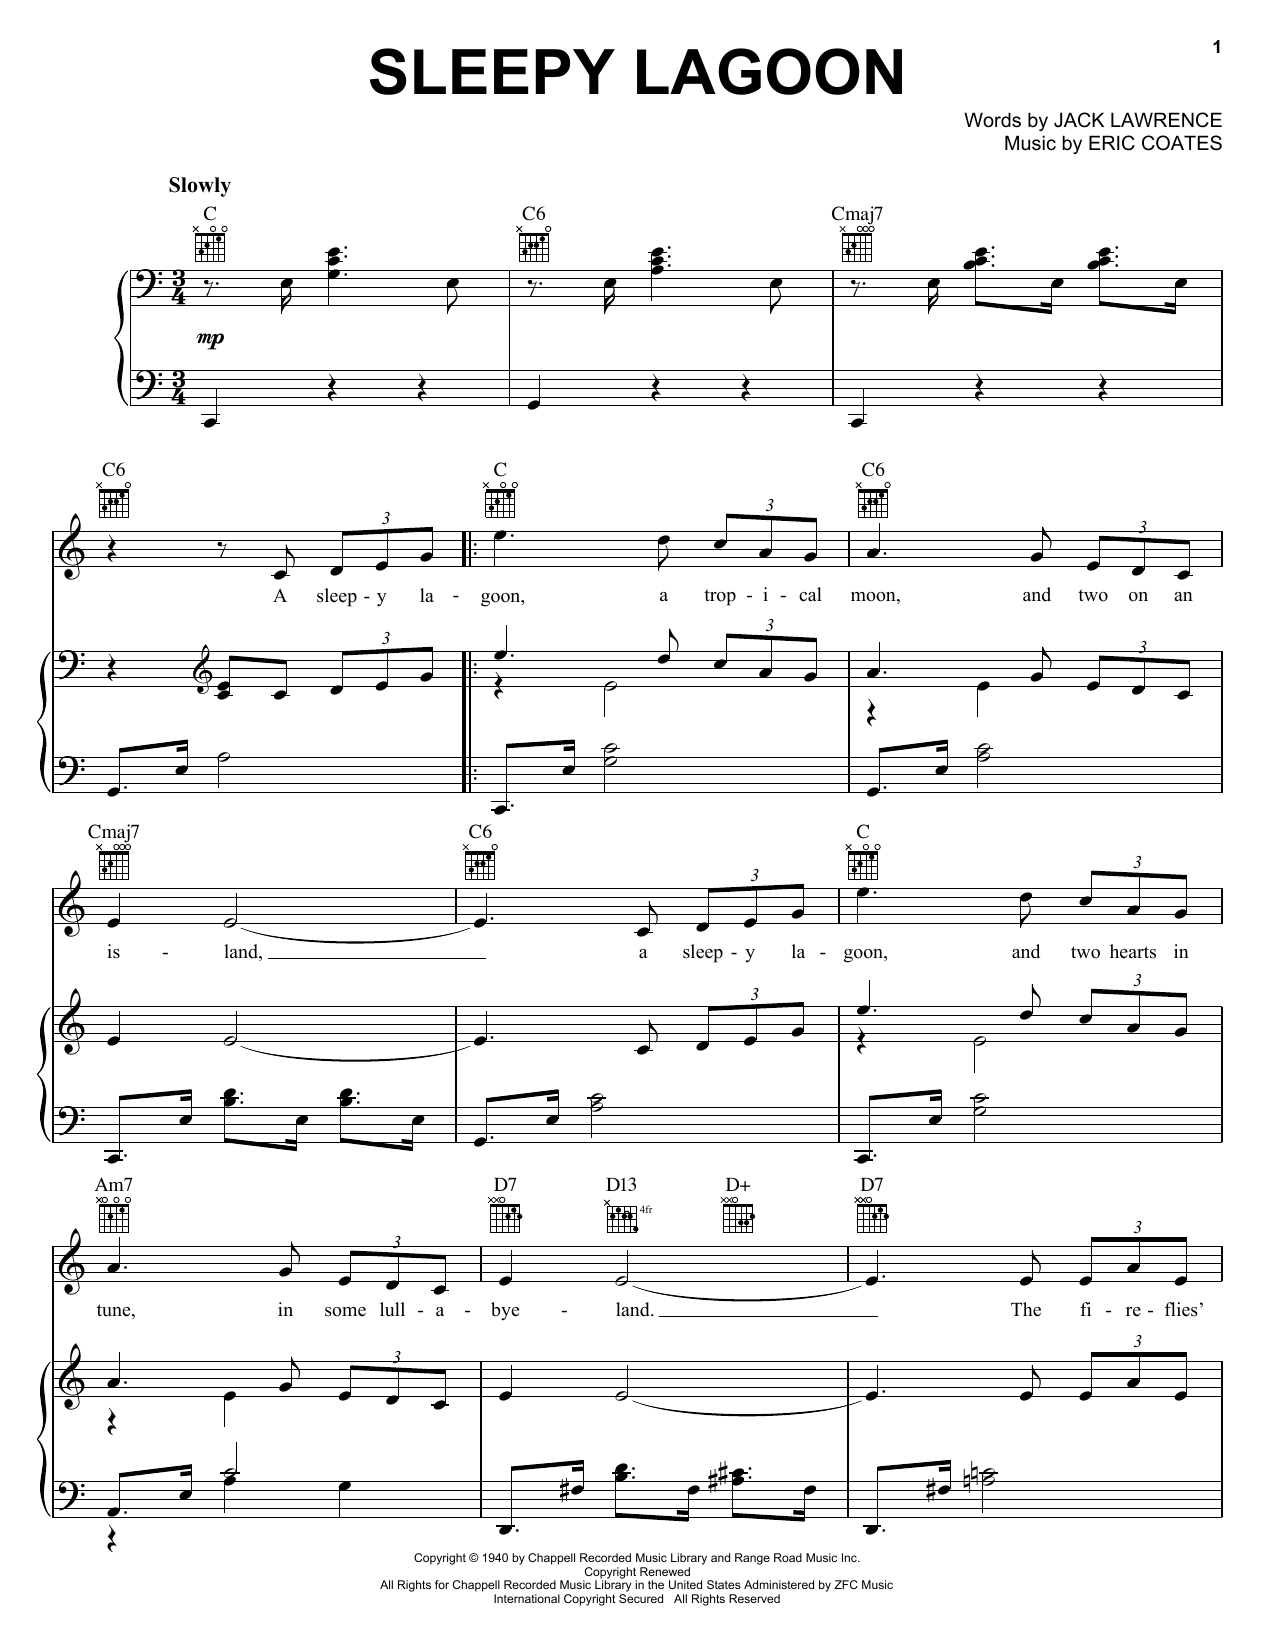 Harry James Sleepy Lagoon Sheet Music Notes & Chords for Ukulele - Download or Print PDF